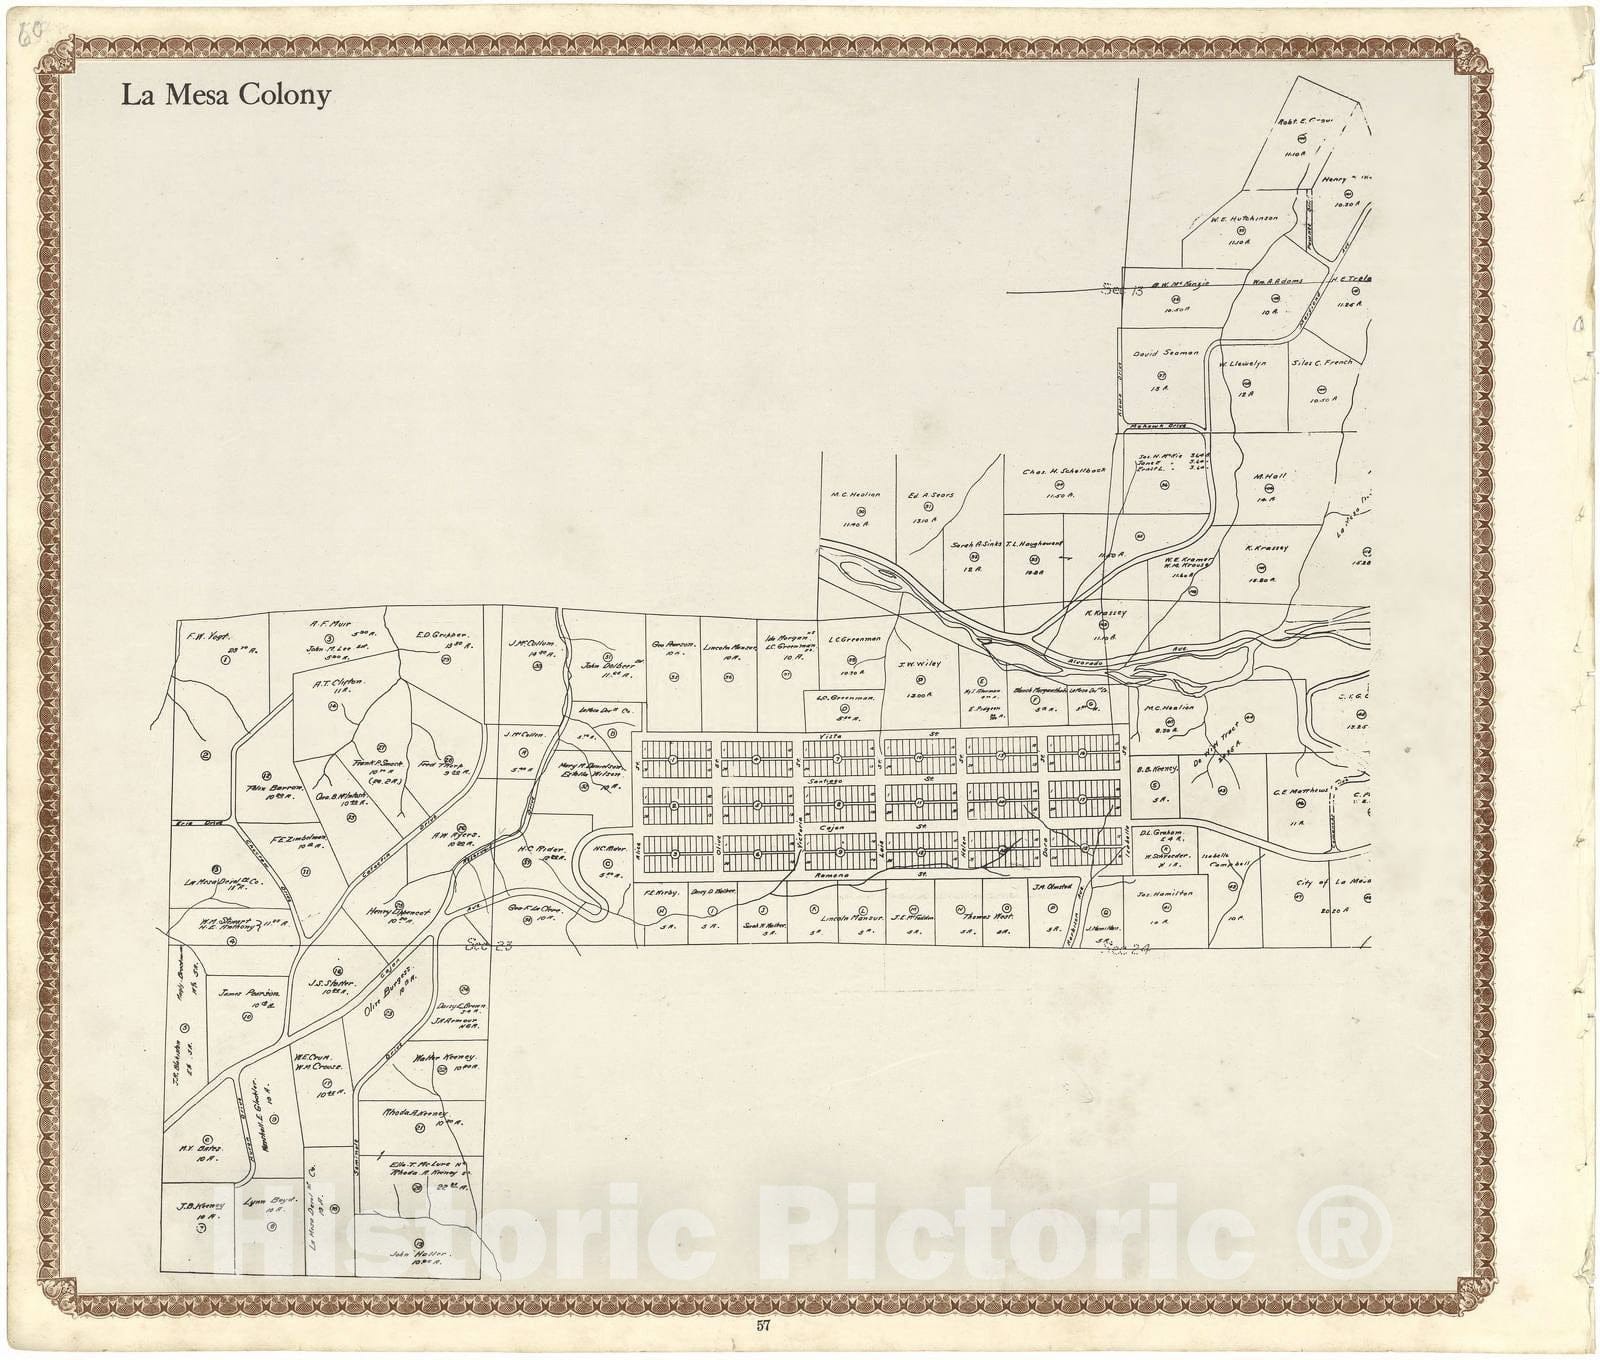 Historic 1912 Map - Plat Book of San Diego County, California - La Mesa Colony